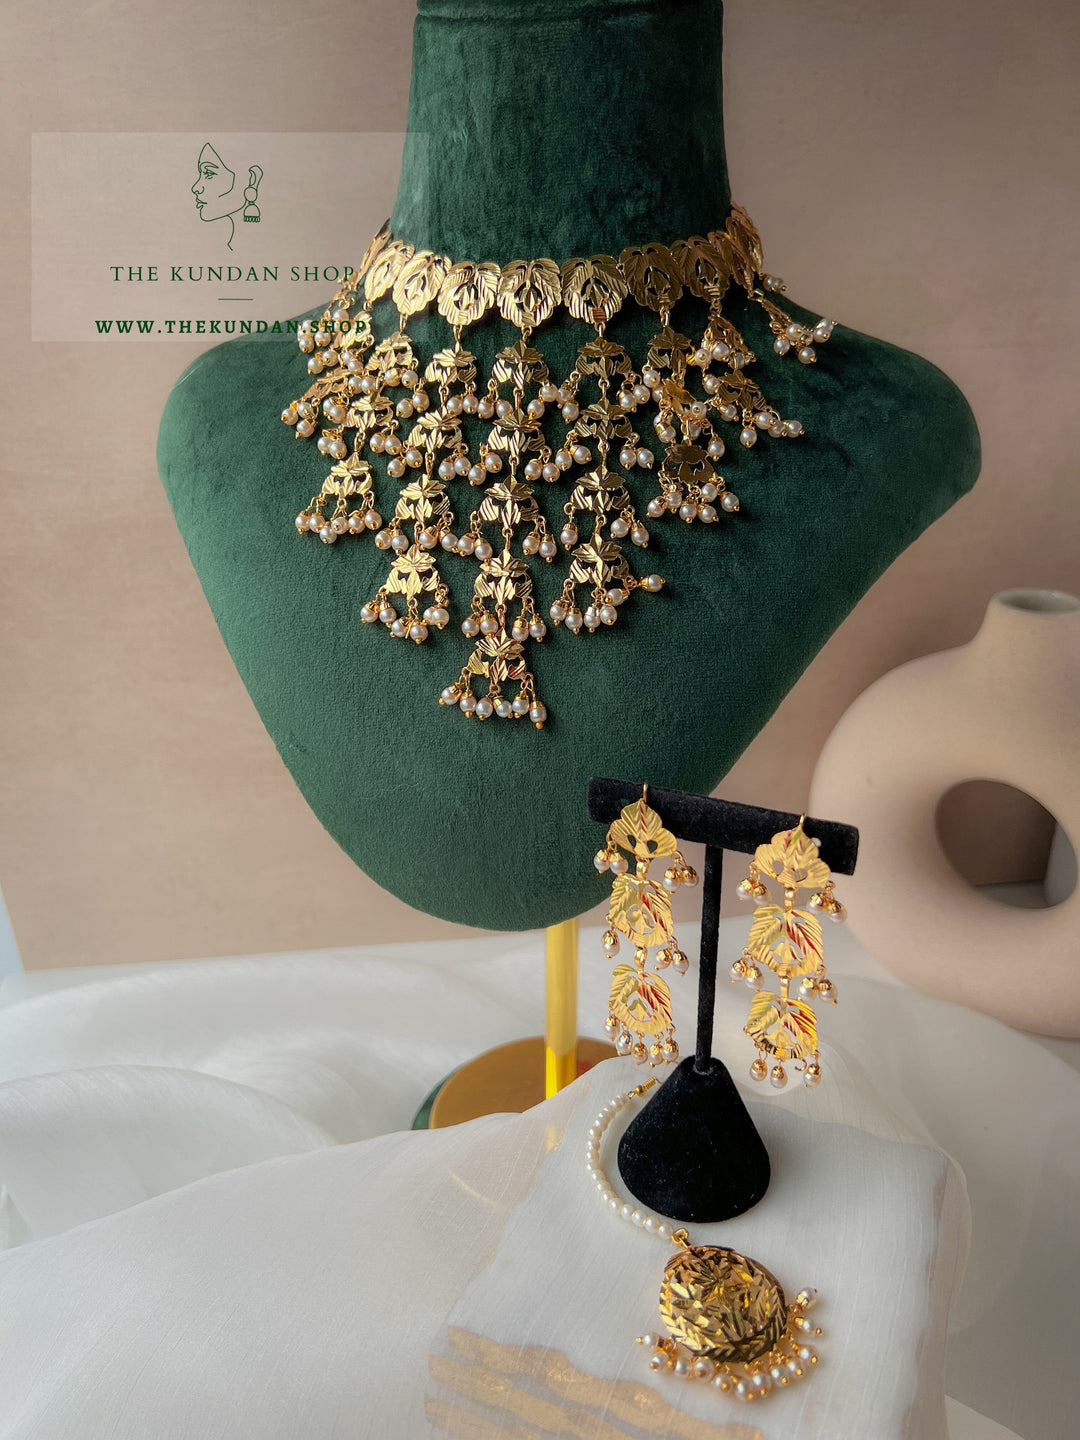 Golden Abundance in Pearl Necklace Sets THE KUNDAN SHOP 